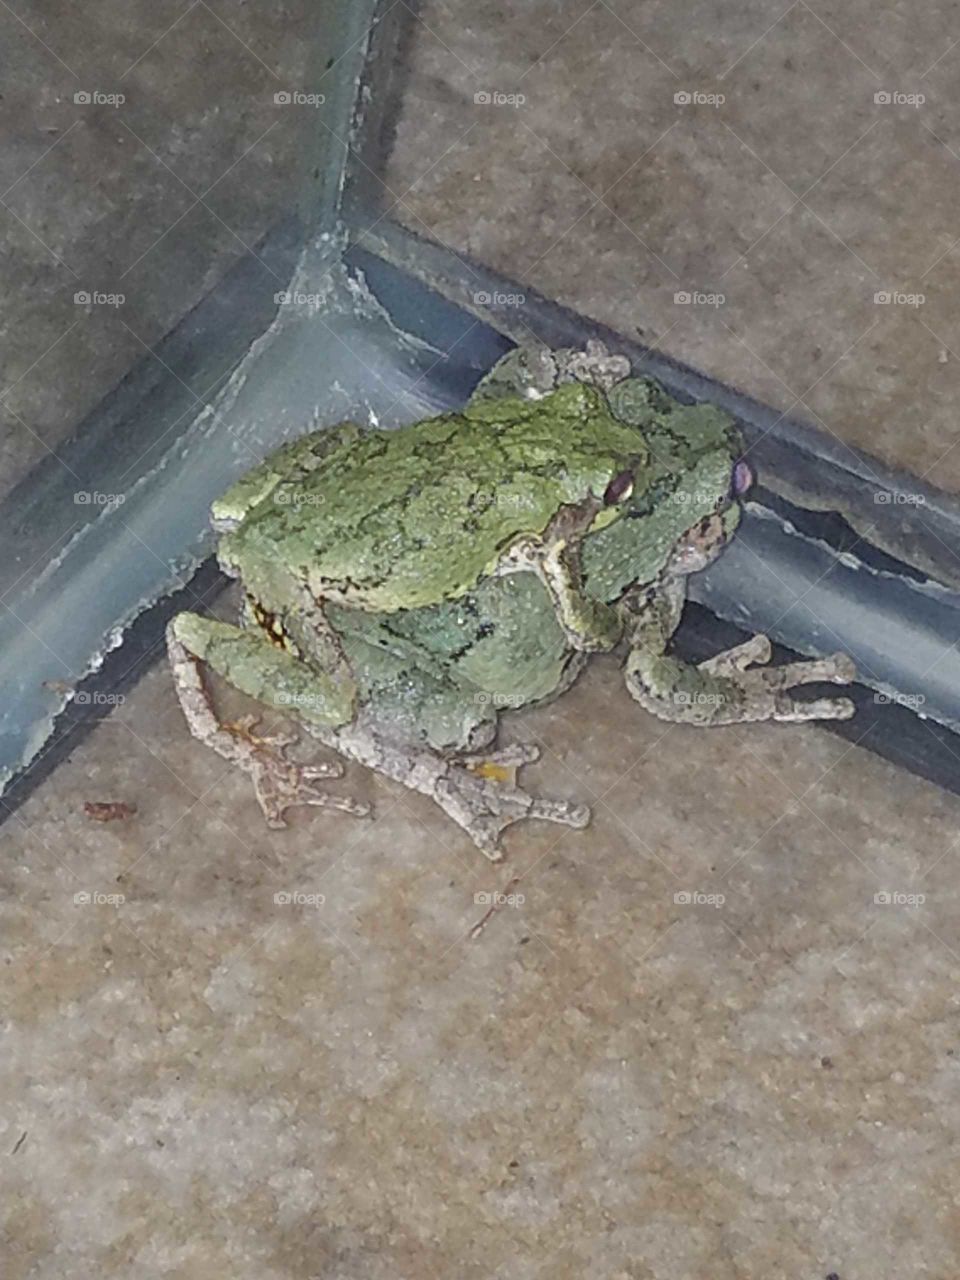 Frog, Amphibian, Nature, Environment, Leaf